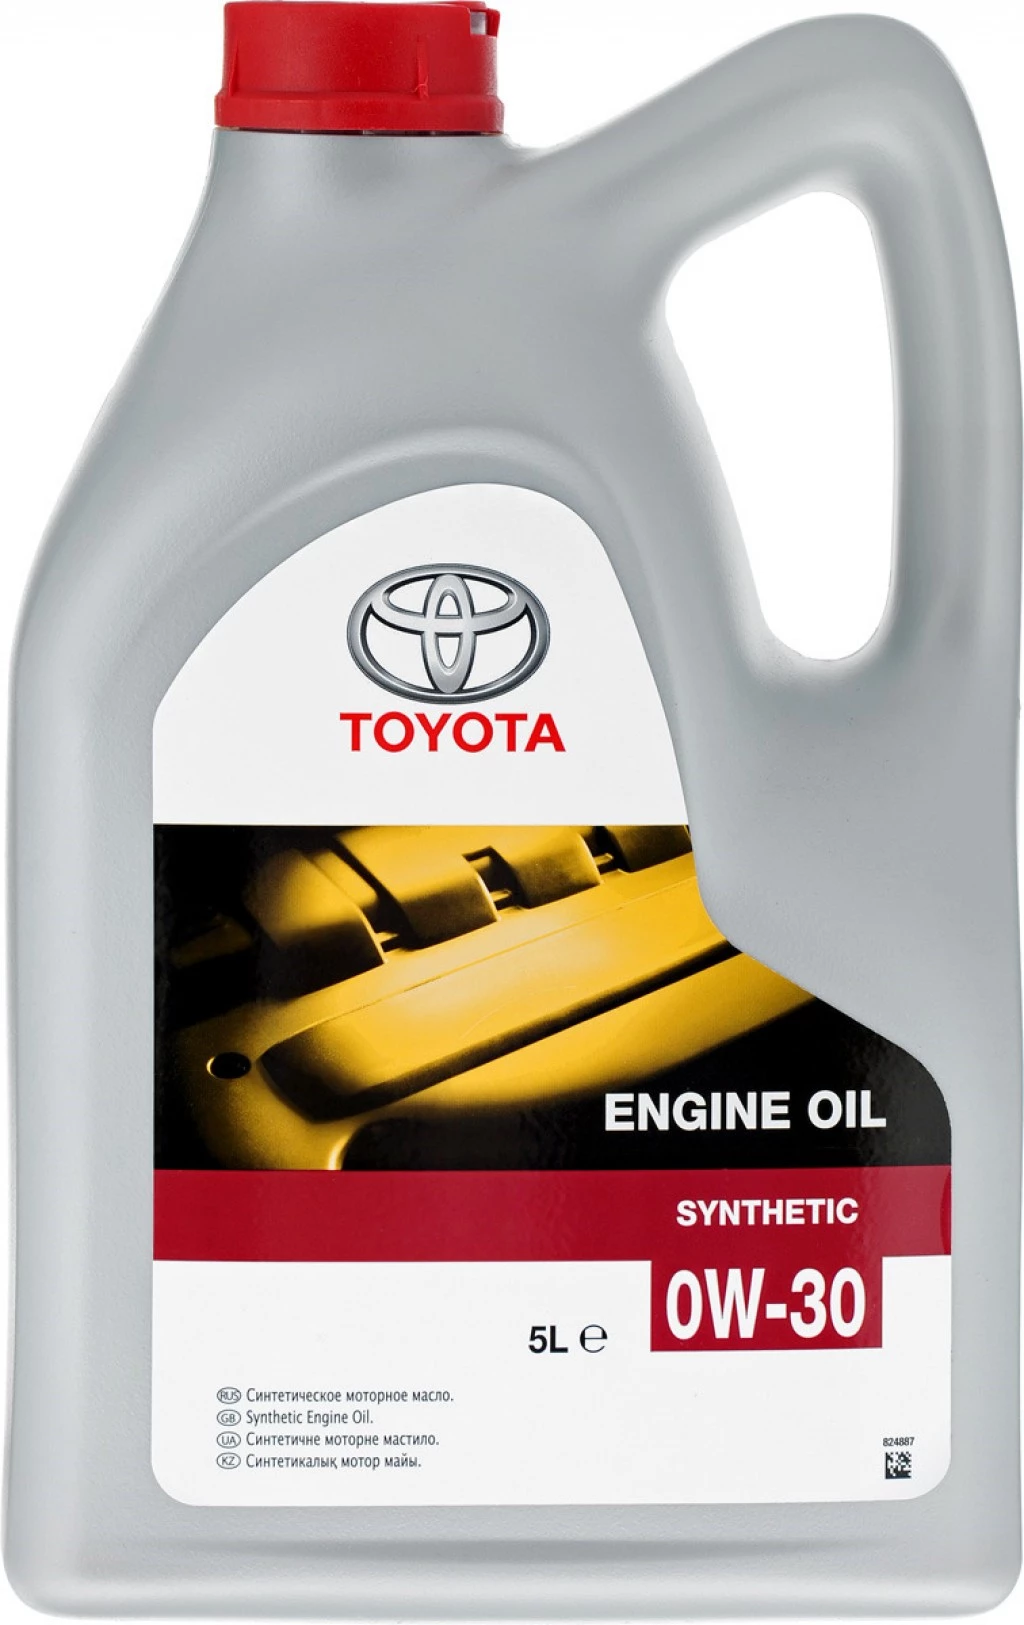 Моторное масло Toyota Engine Oil 0W-30 синтетическое 5 л